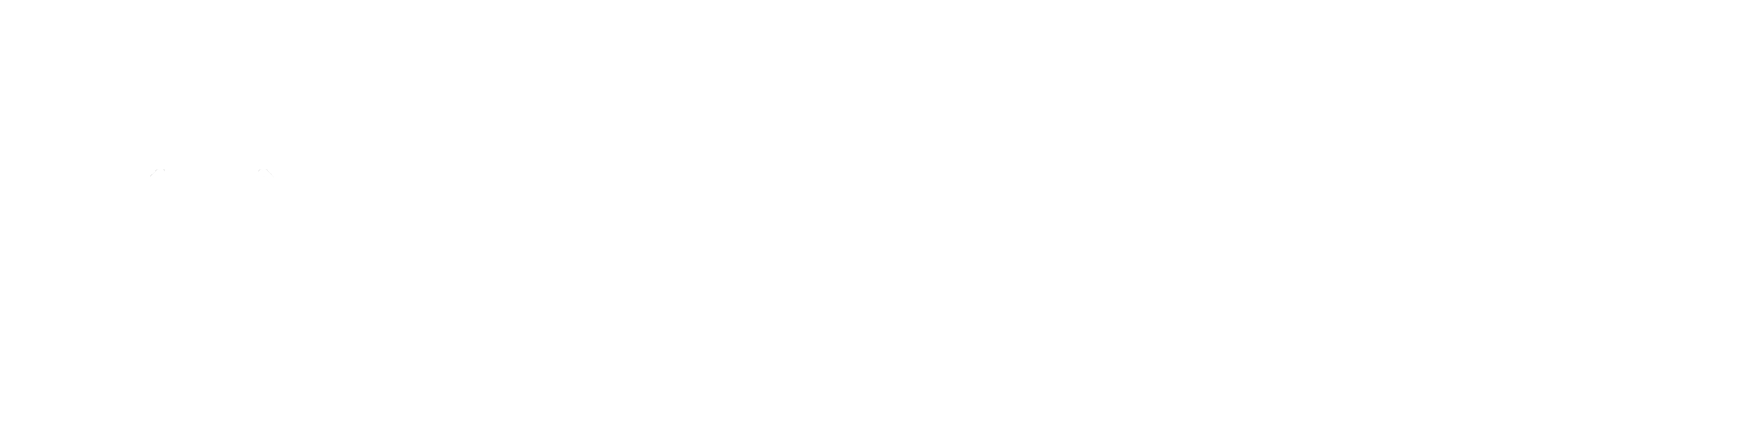 ftg-financial-logo-white-updated